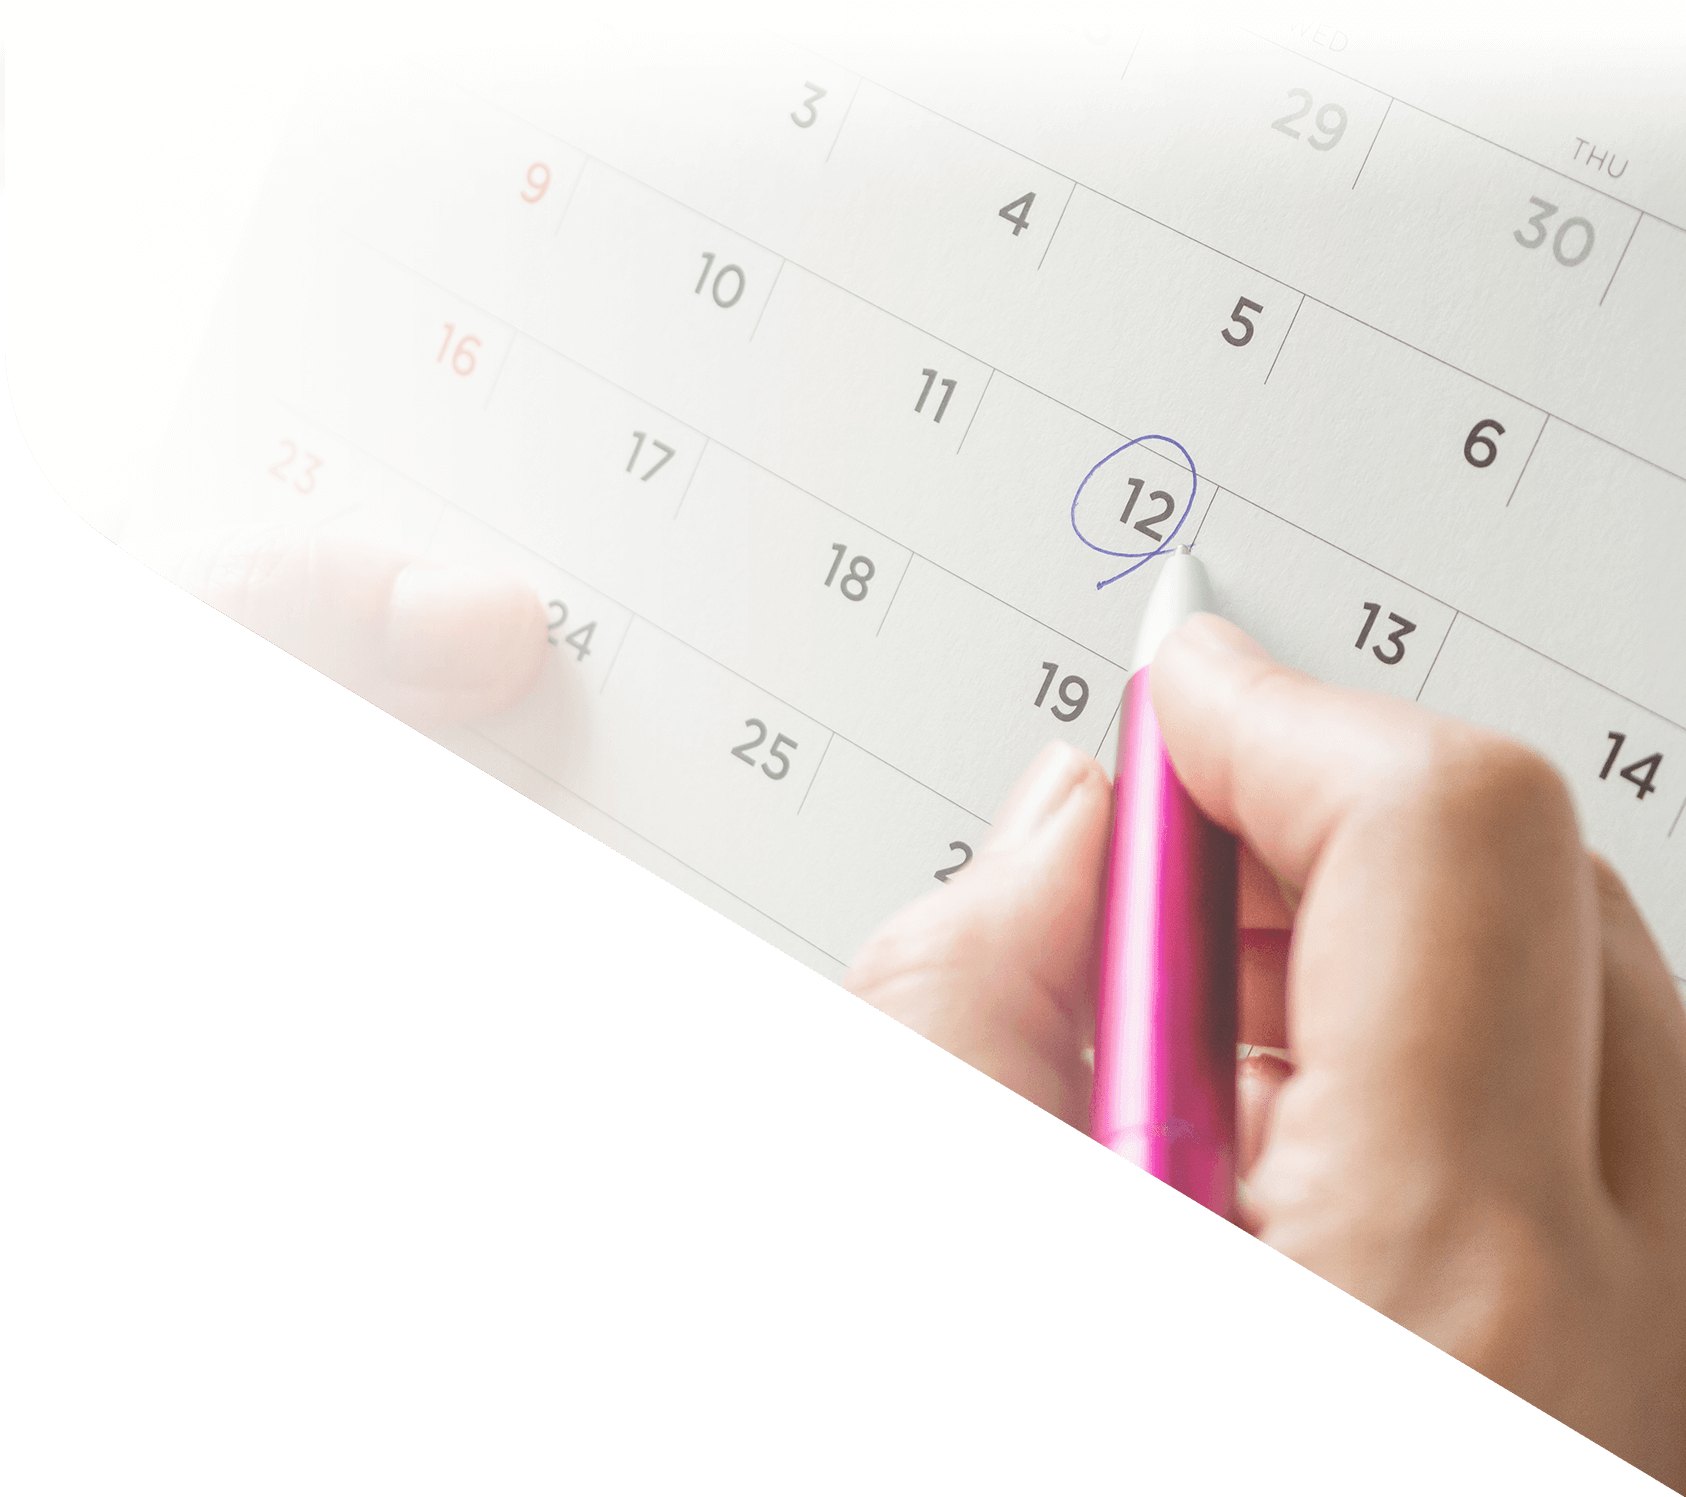 Event calendar with dates